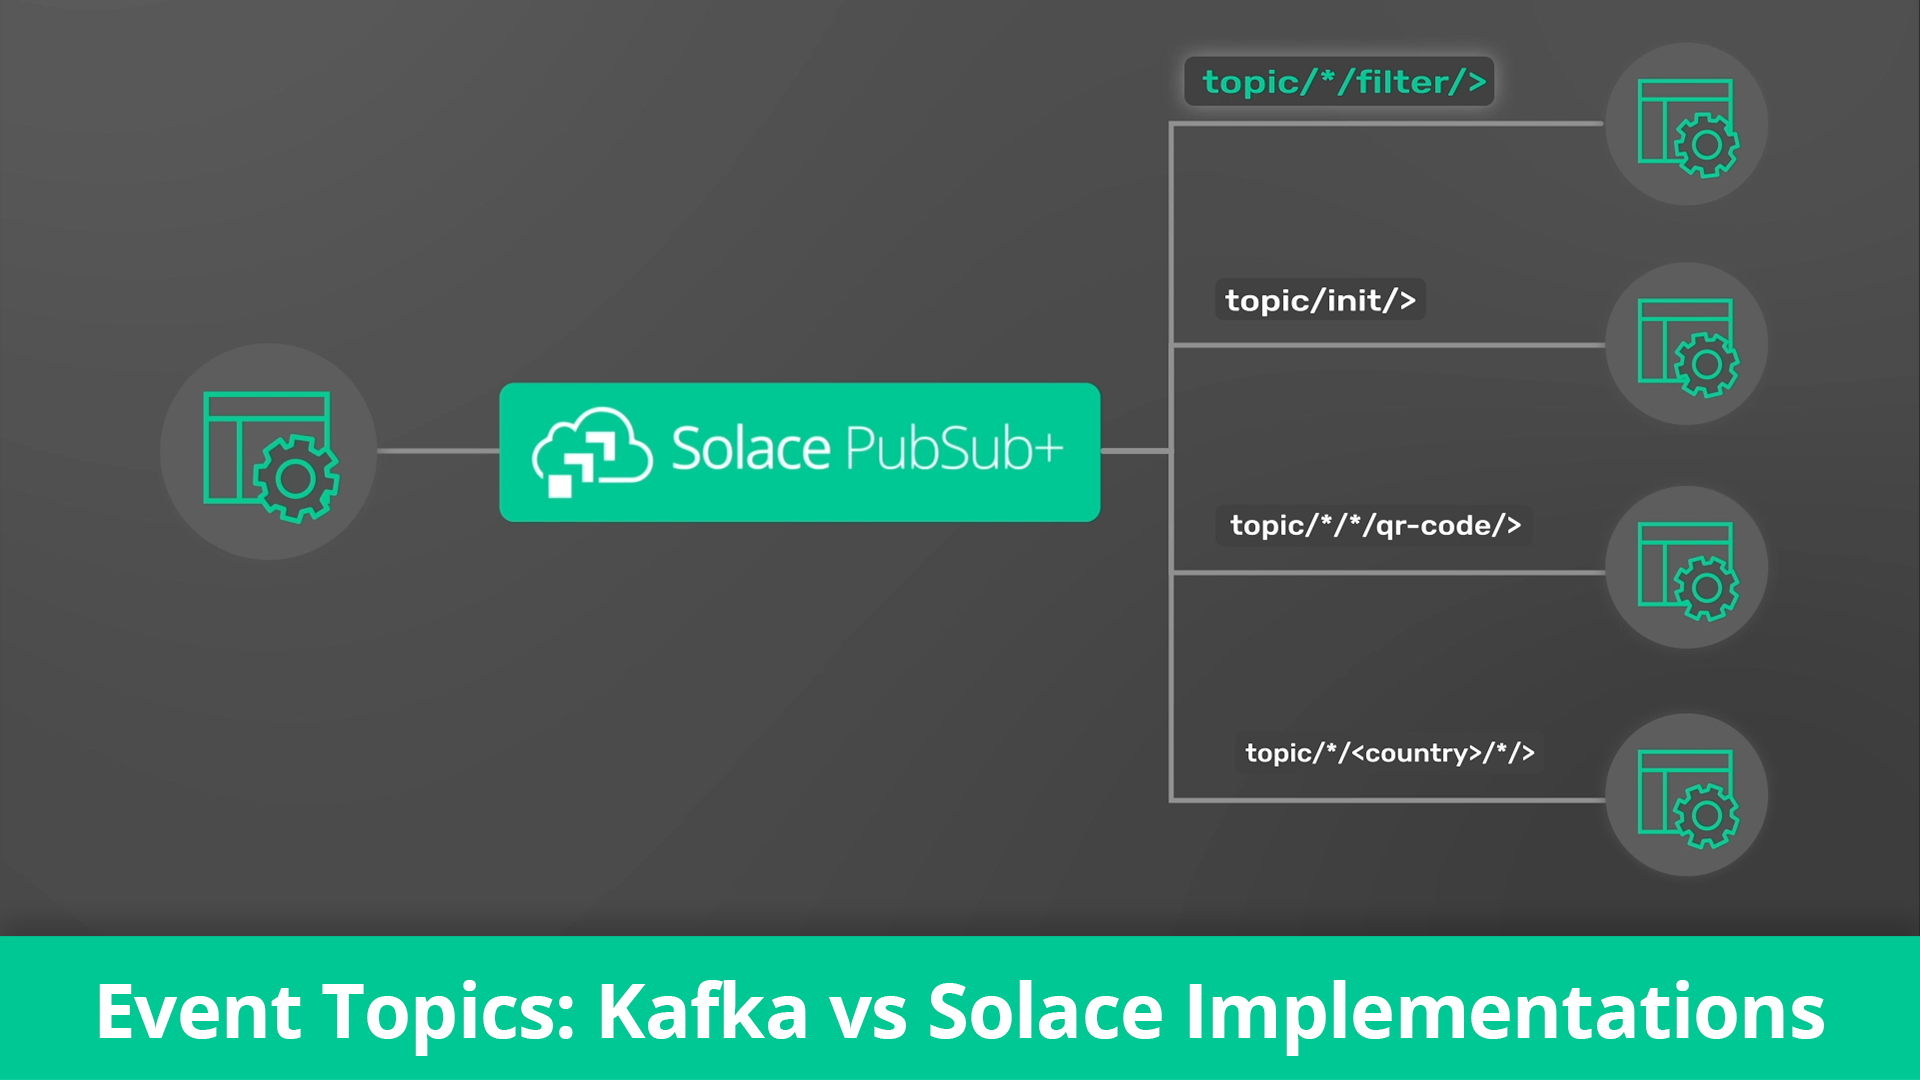 Event topics: Kafka vs Solace implementations